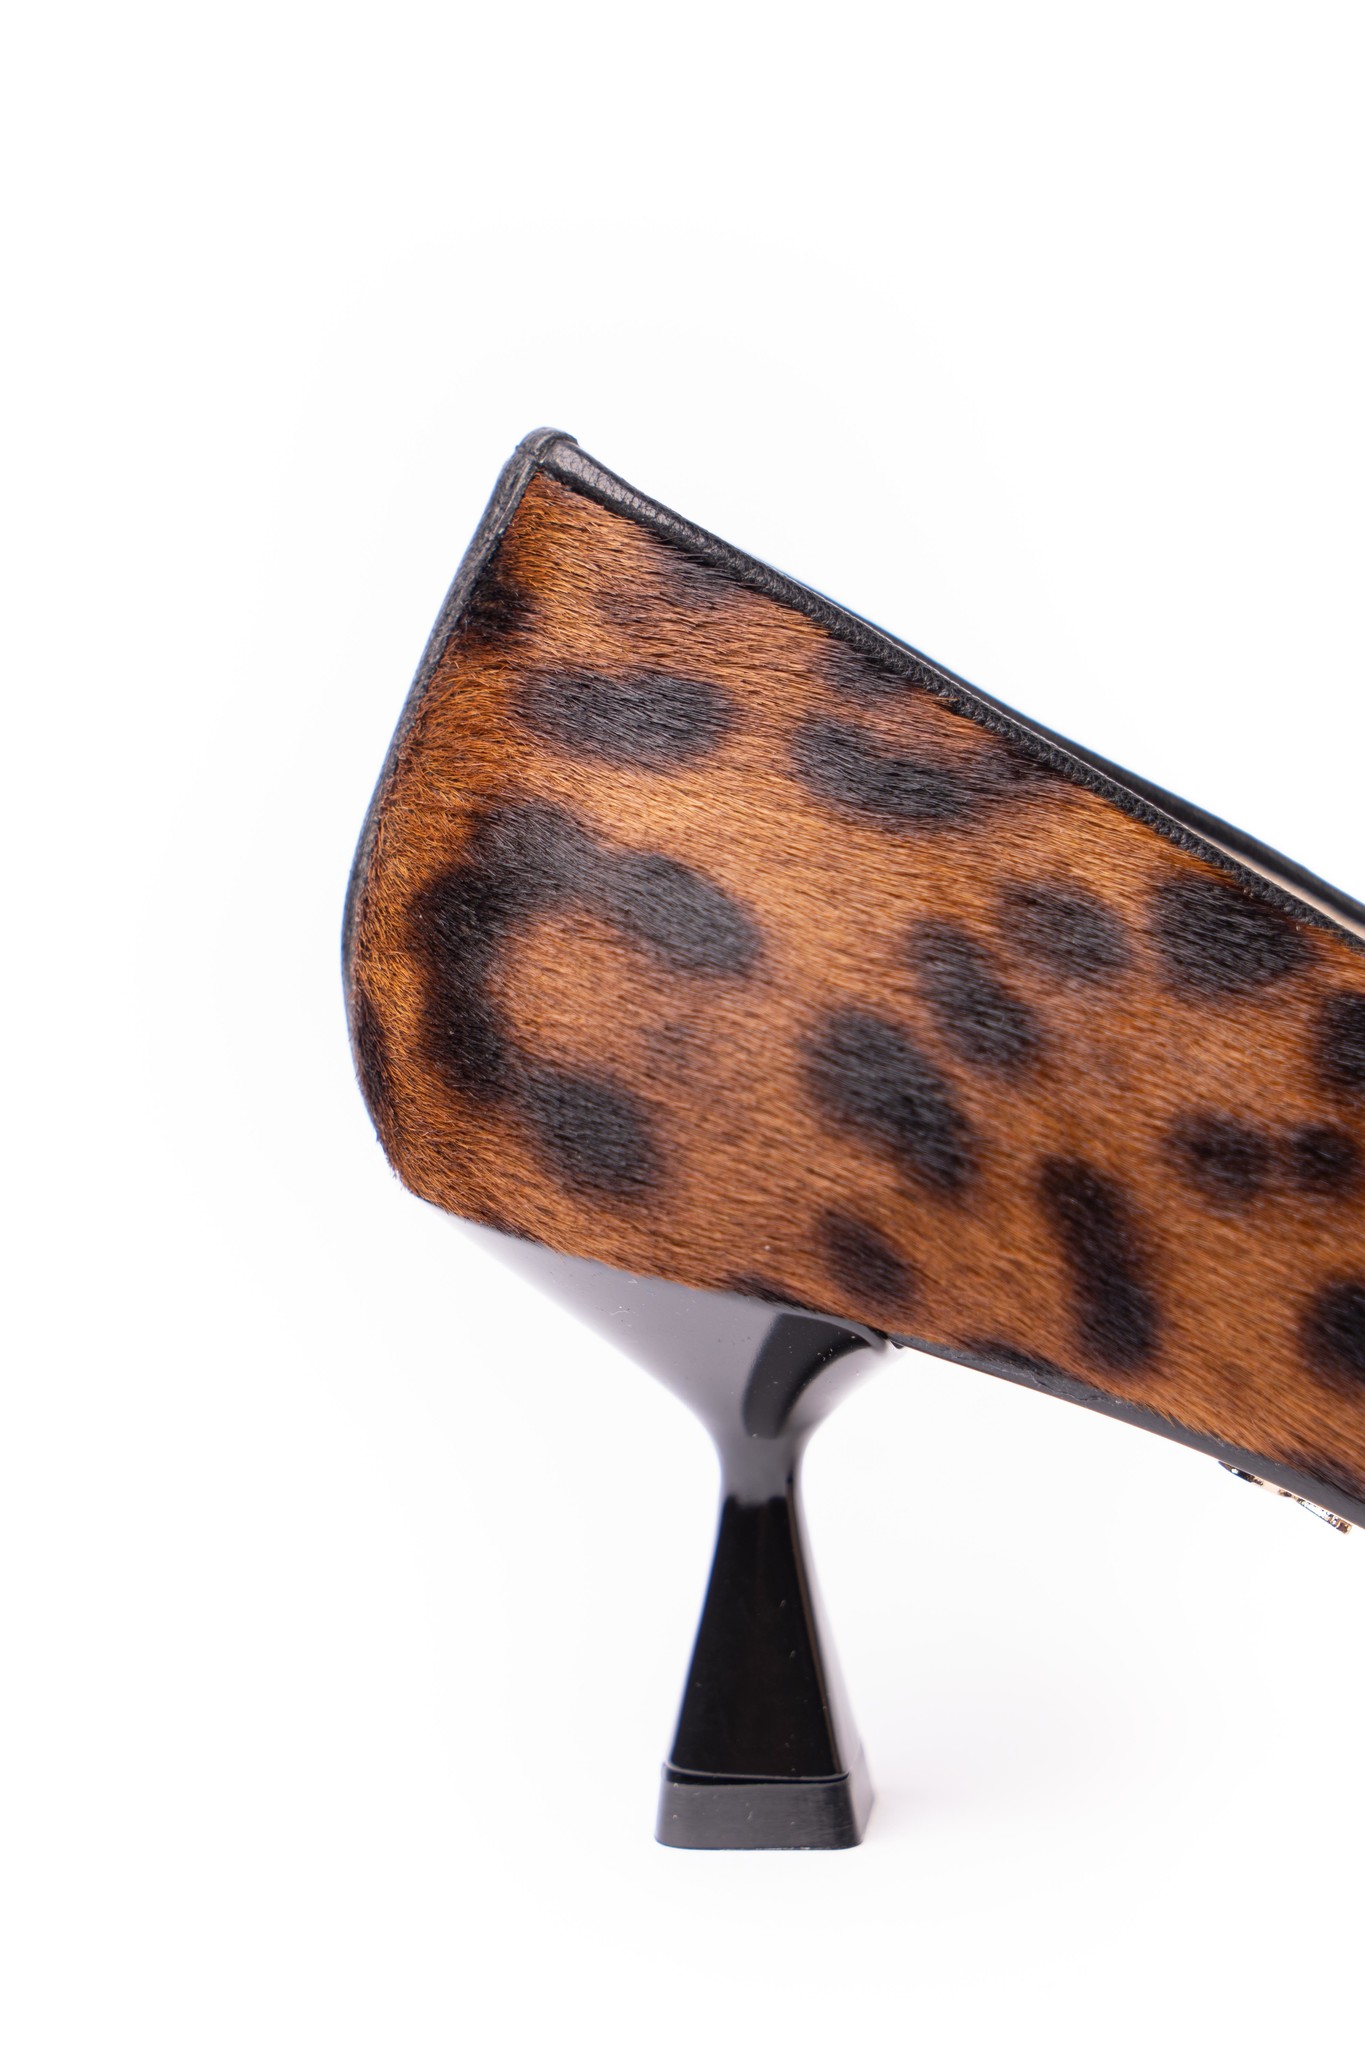 Schutz Shoes Womens 6 Amour Leopard Print Kitten Pump Yellow Low Heels Open  Toe | eBay